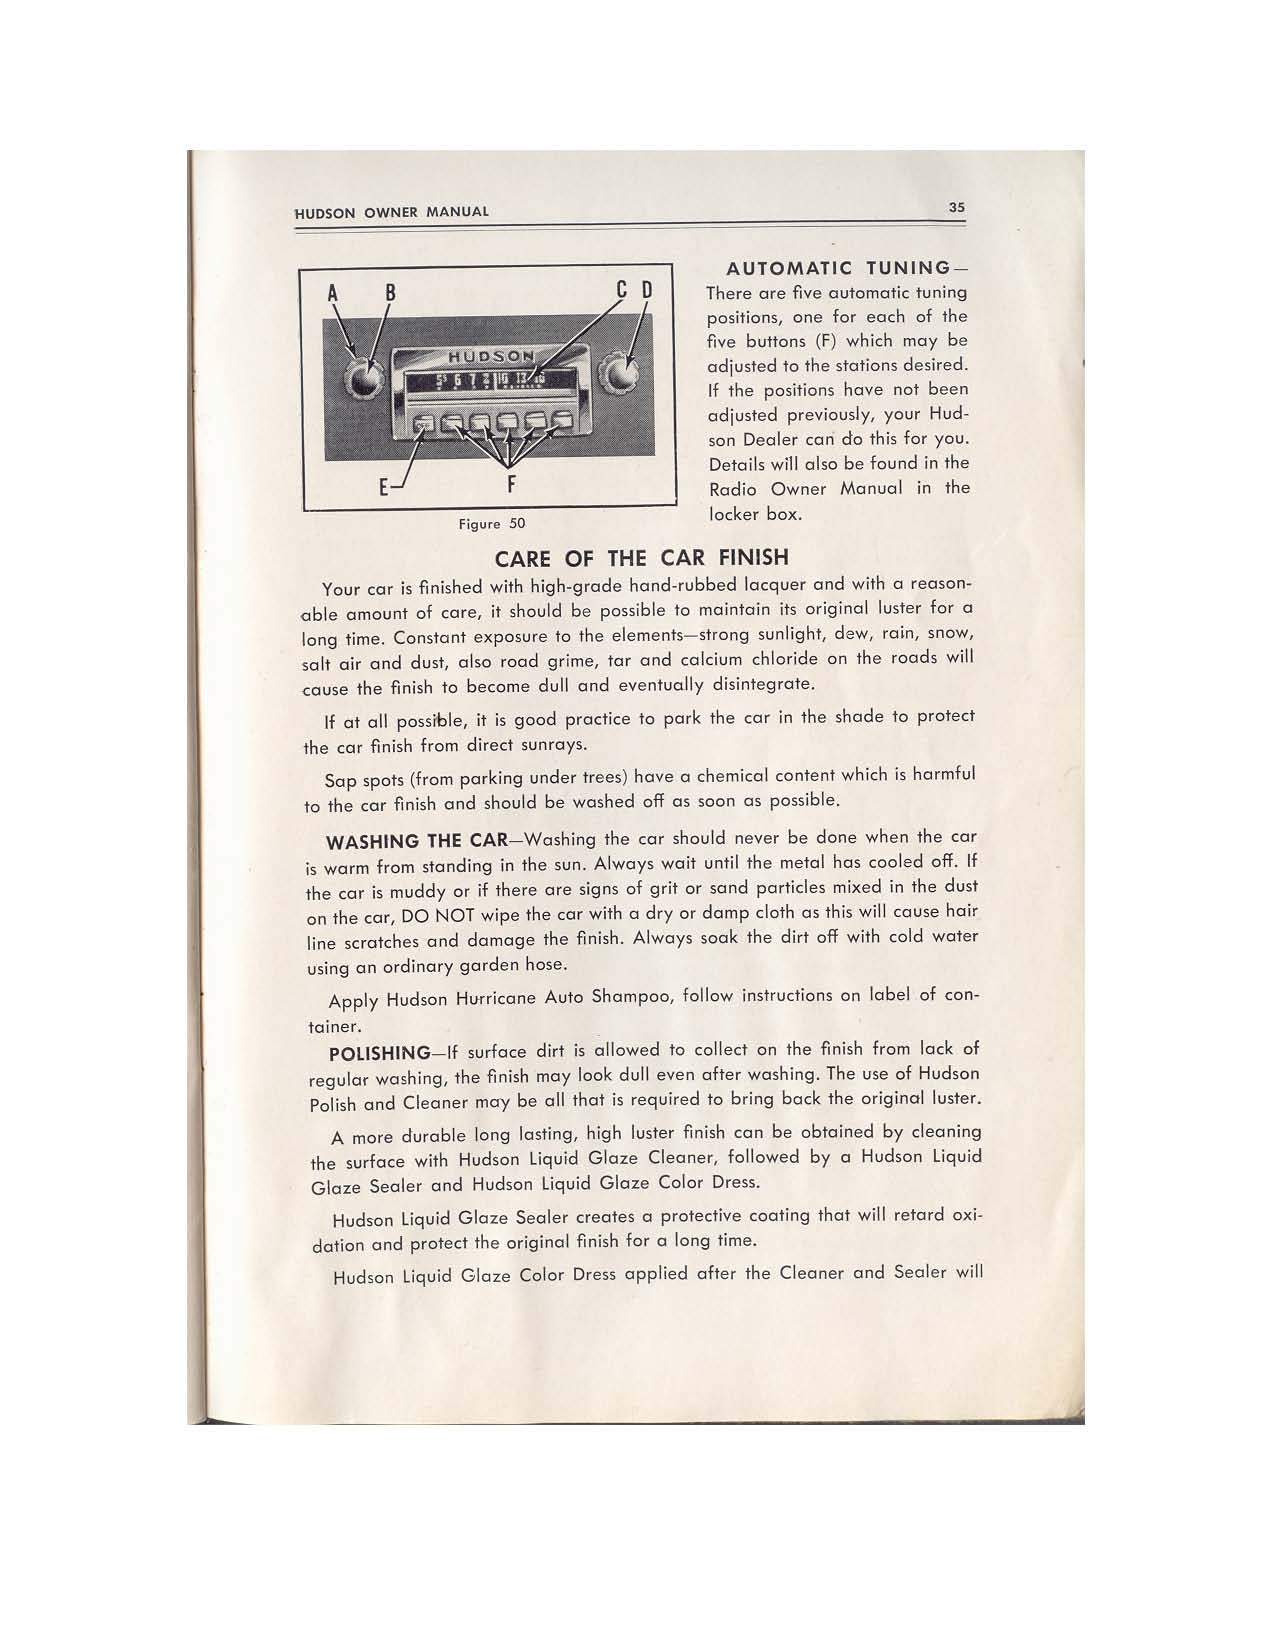 1953 Hudson Jet Owners Manual-36